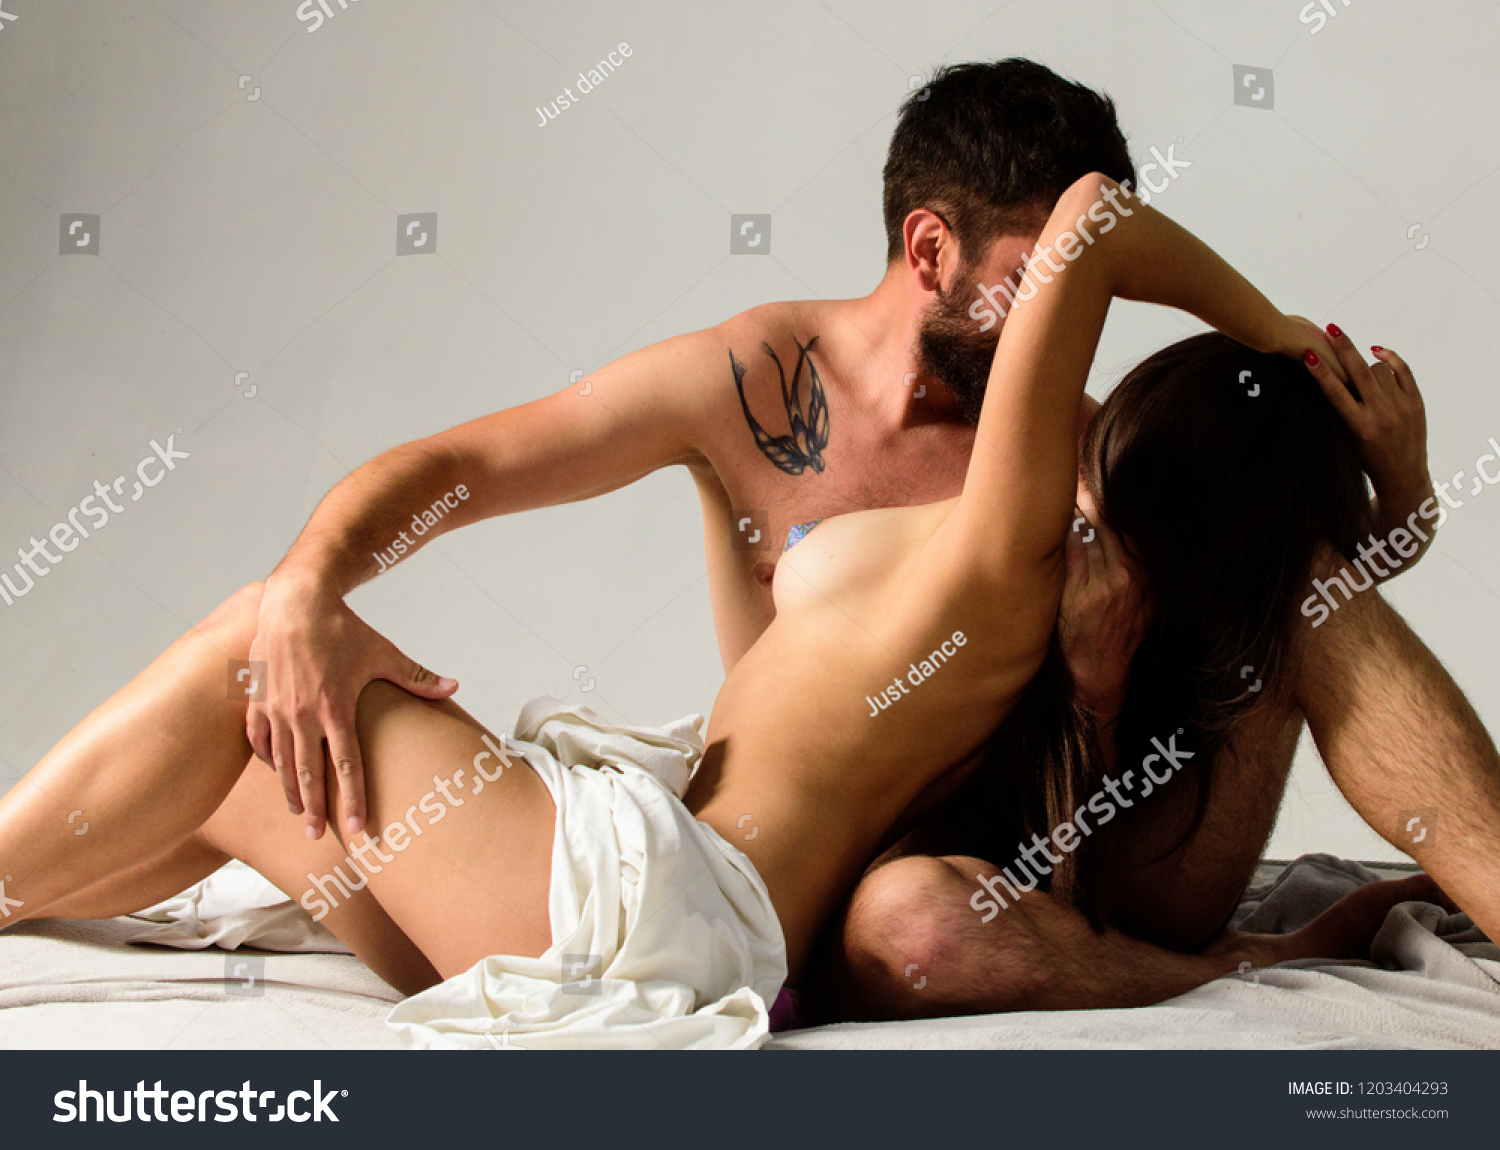 dorothy prewitt add hot naked couple sex photo